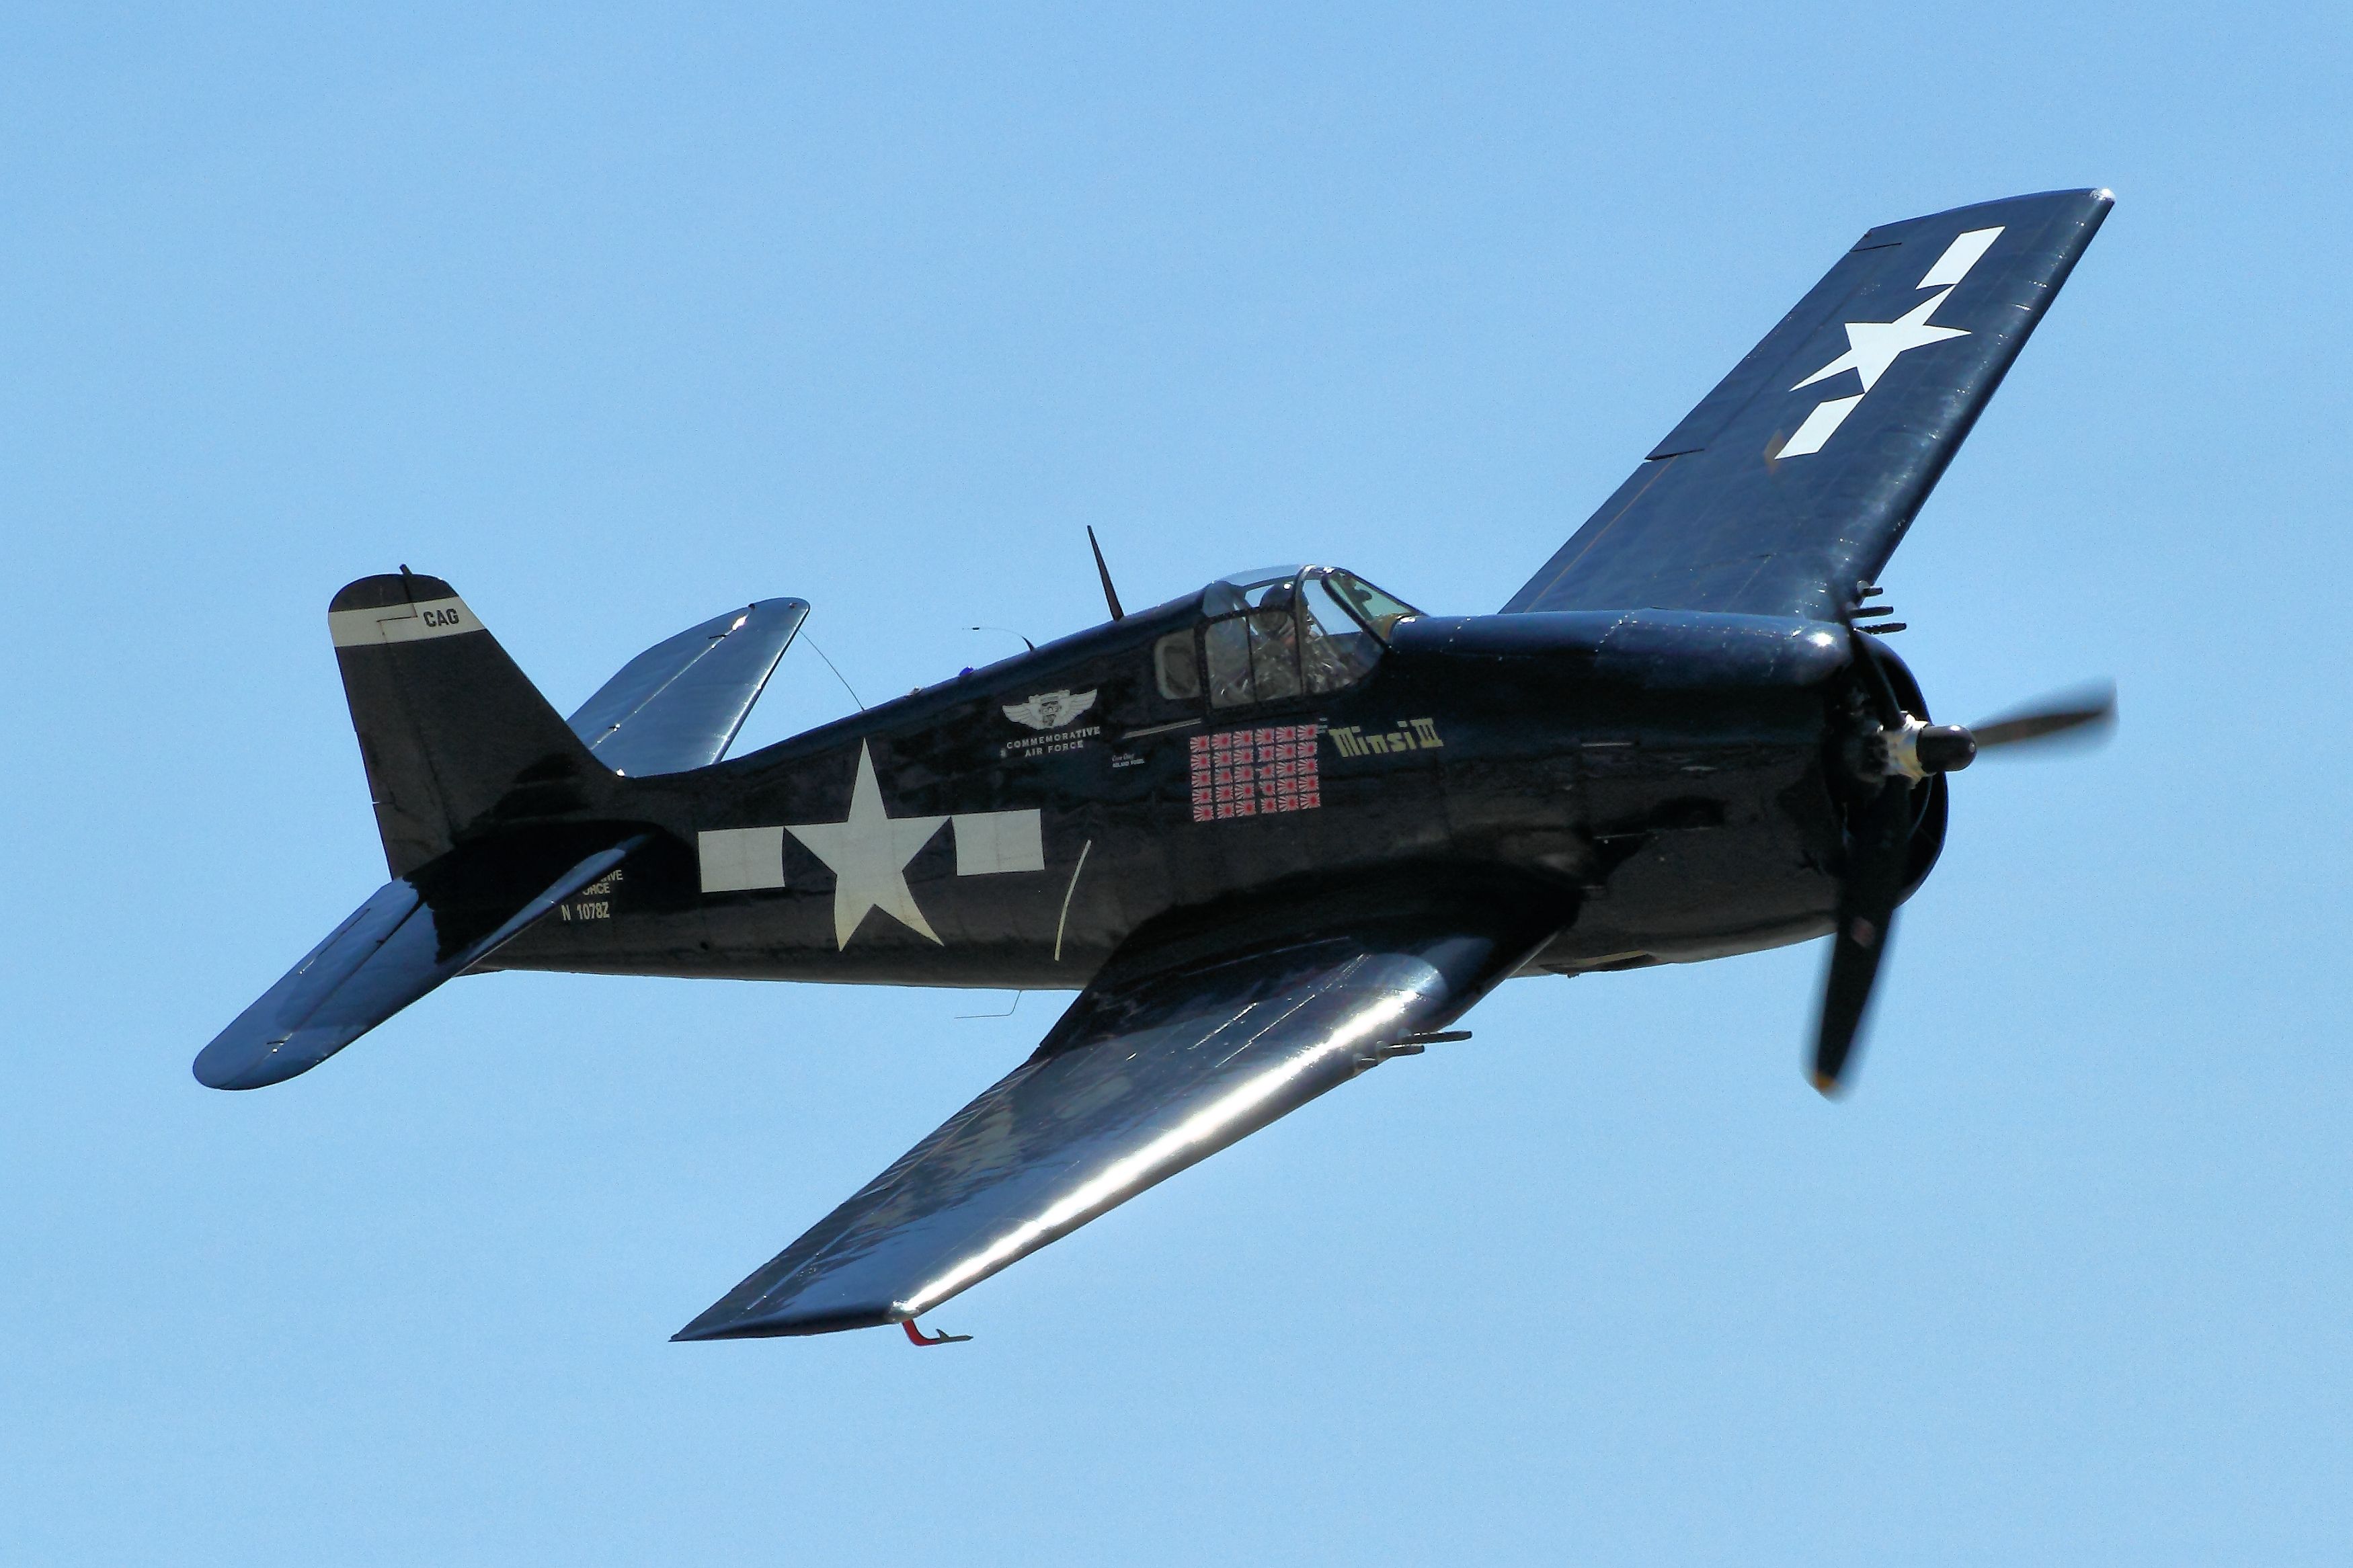 A Grumman F6F Hellcat flying in the sky.